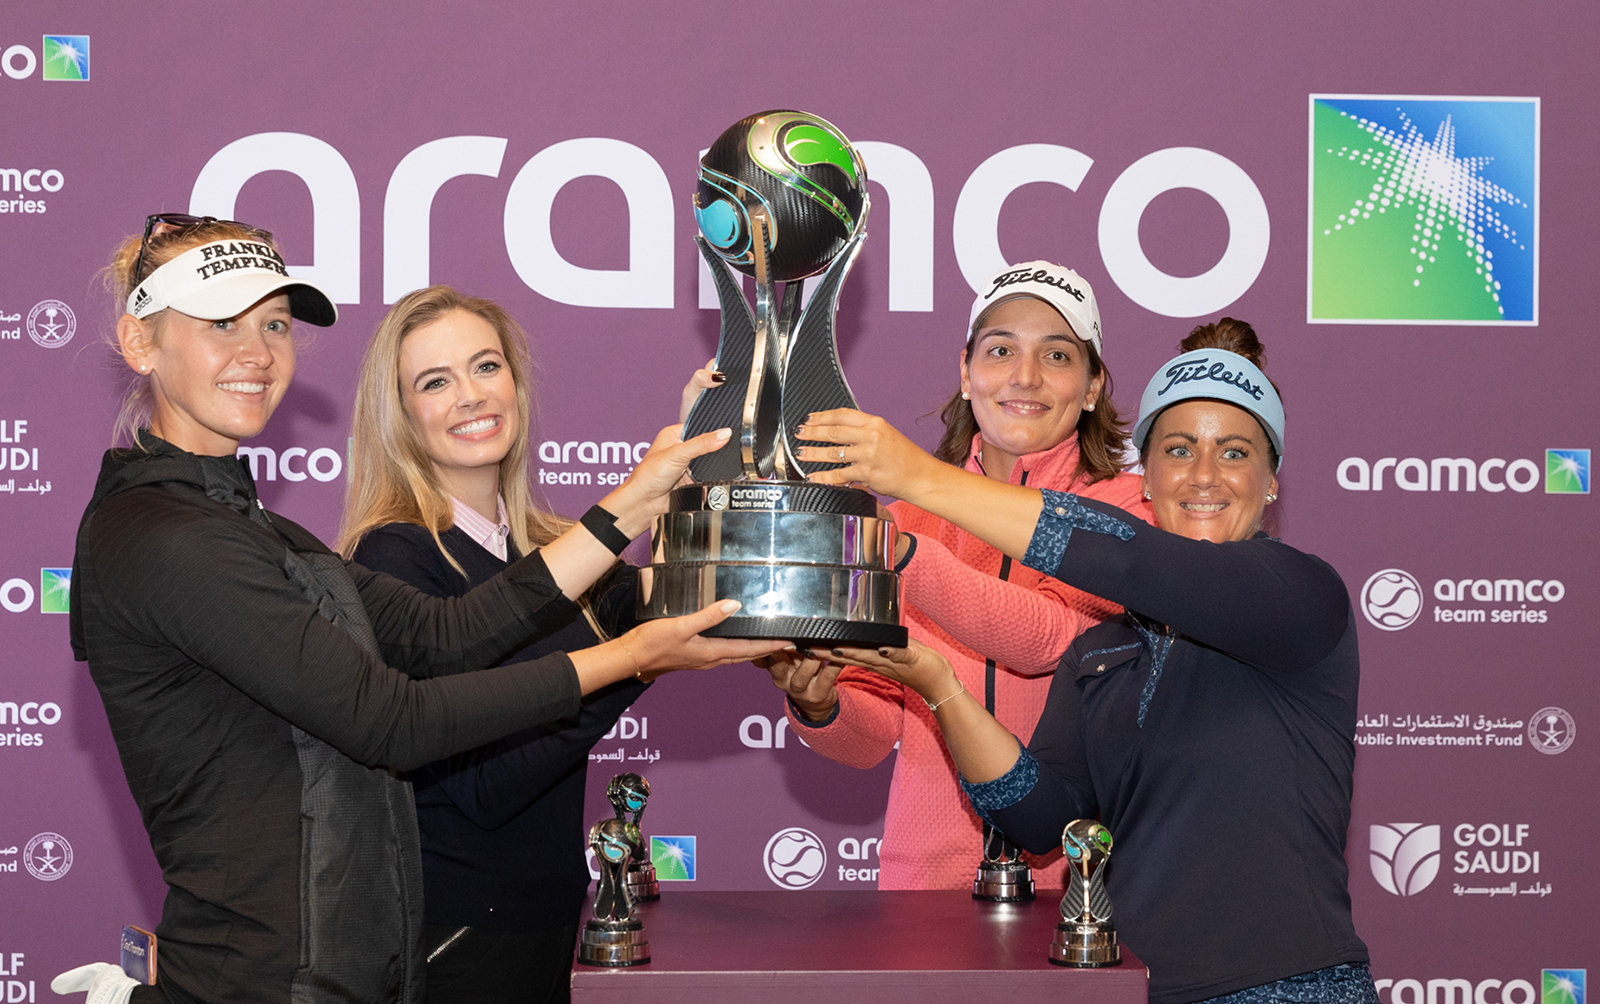 Aramco Team Series brings innovative golf format to U.S. Aramco Americas